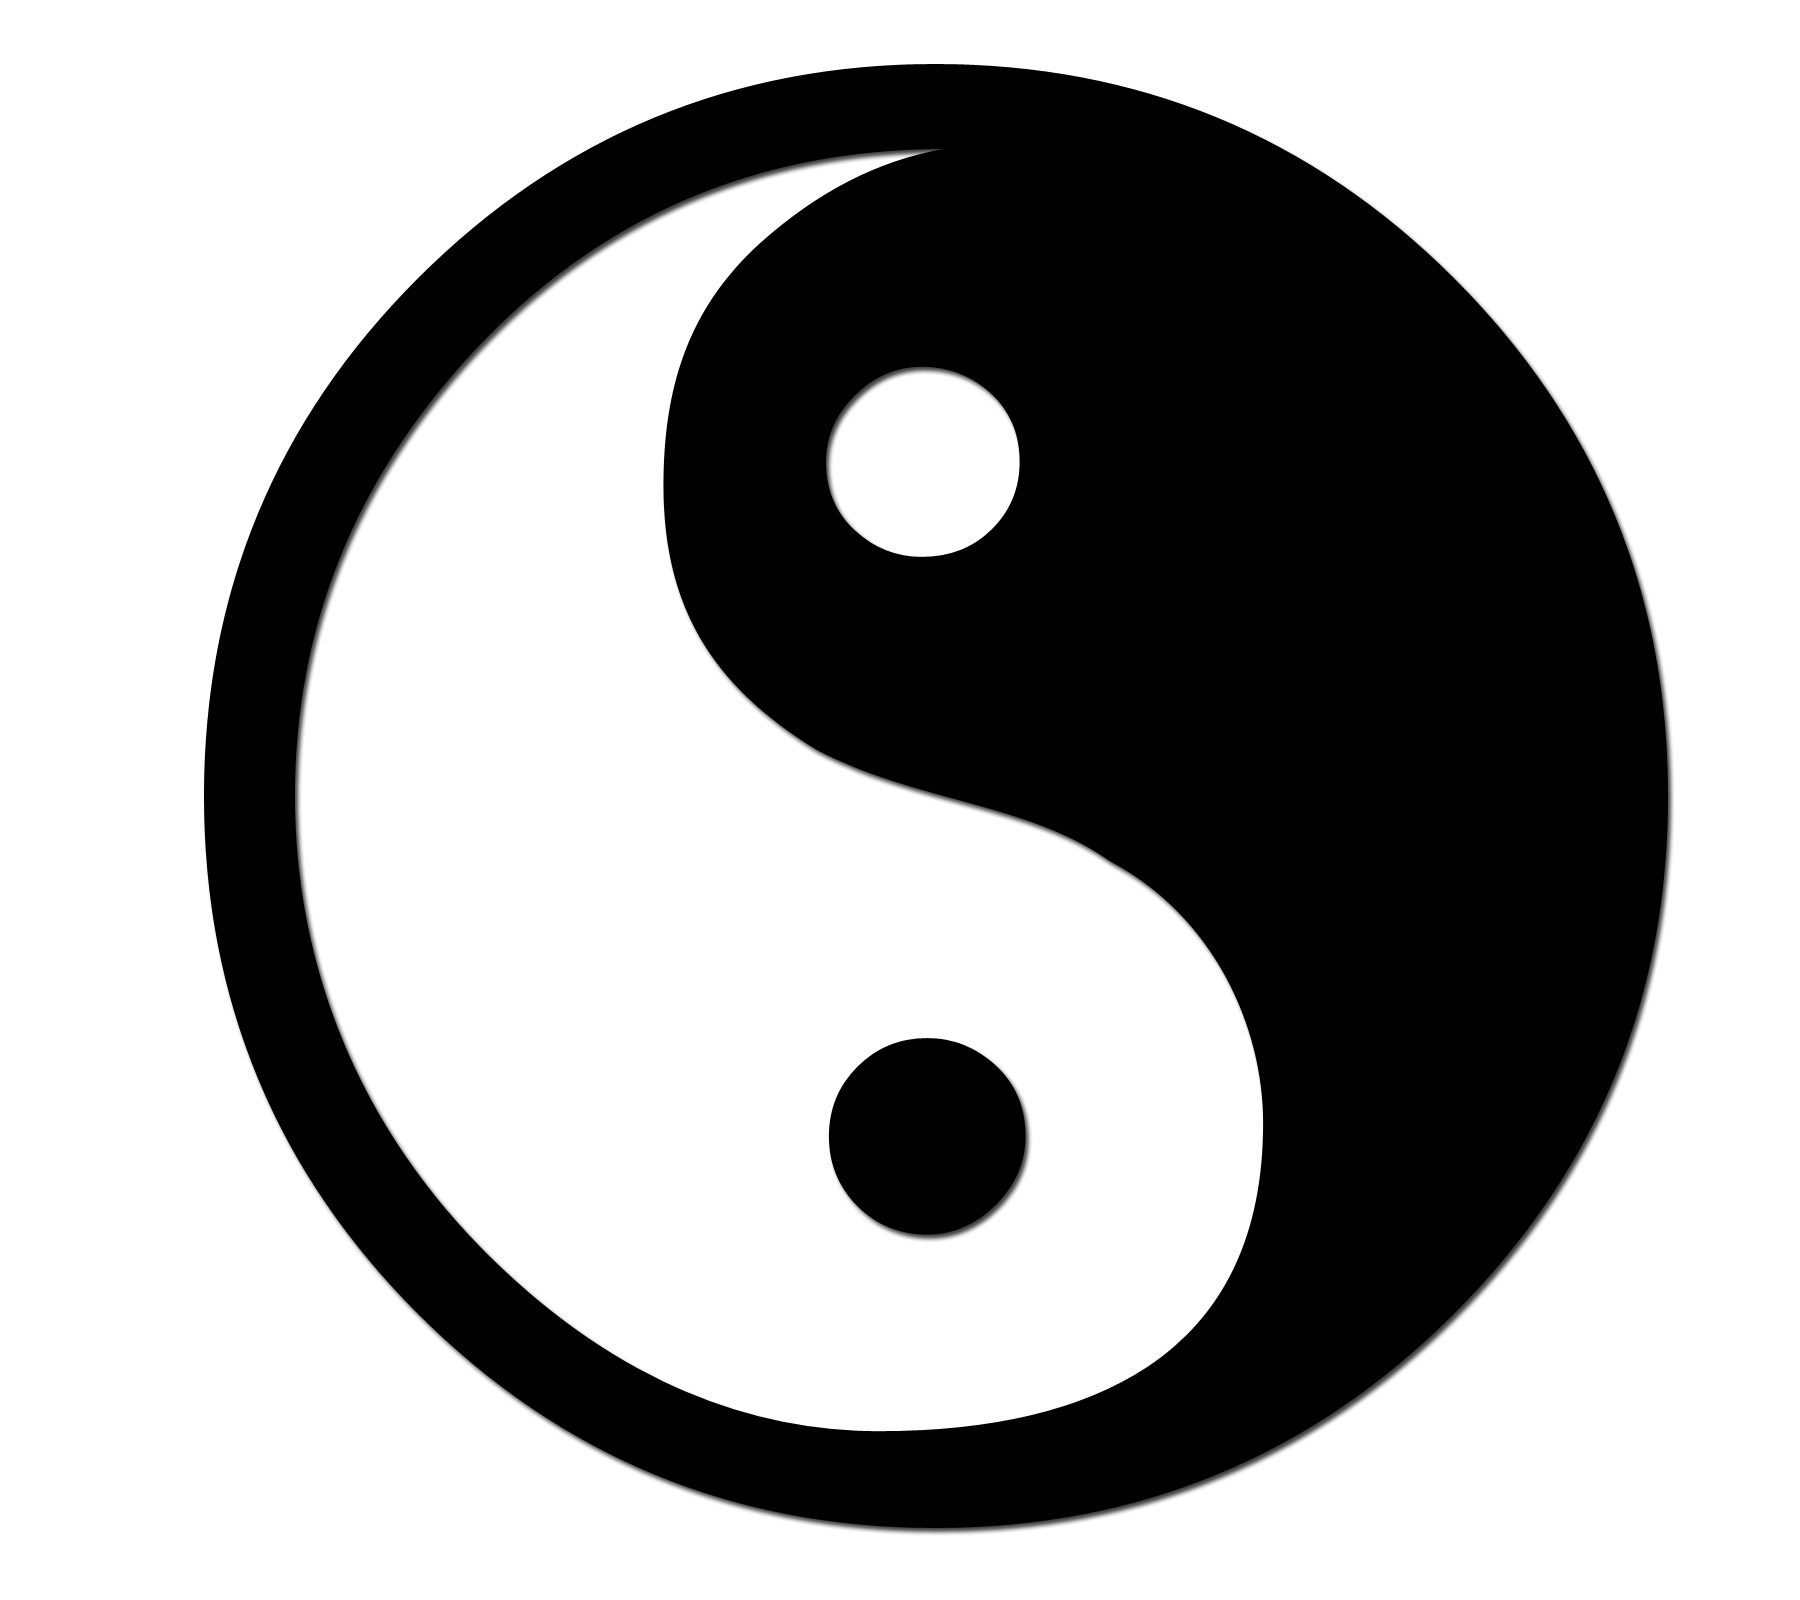 Yin Yang png download - 1024*713 - Free Transparent Yin And Yang